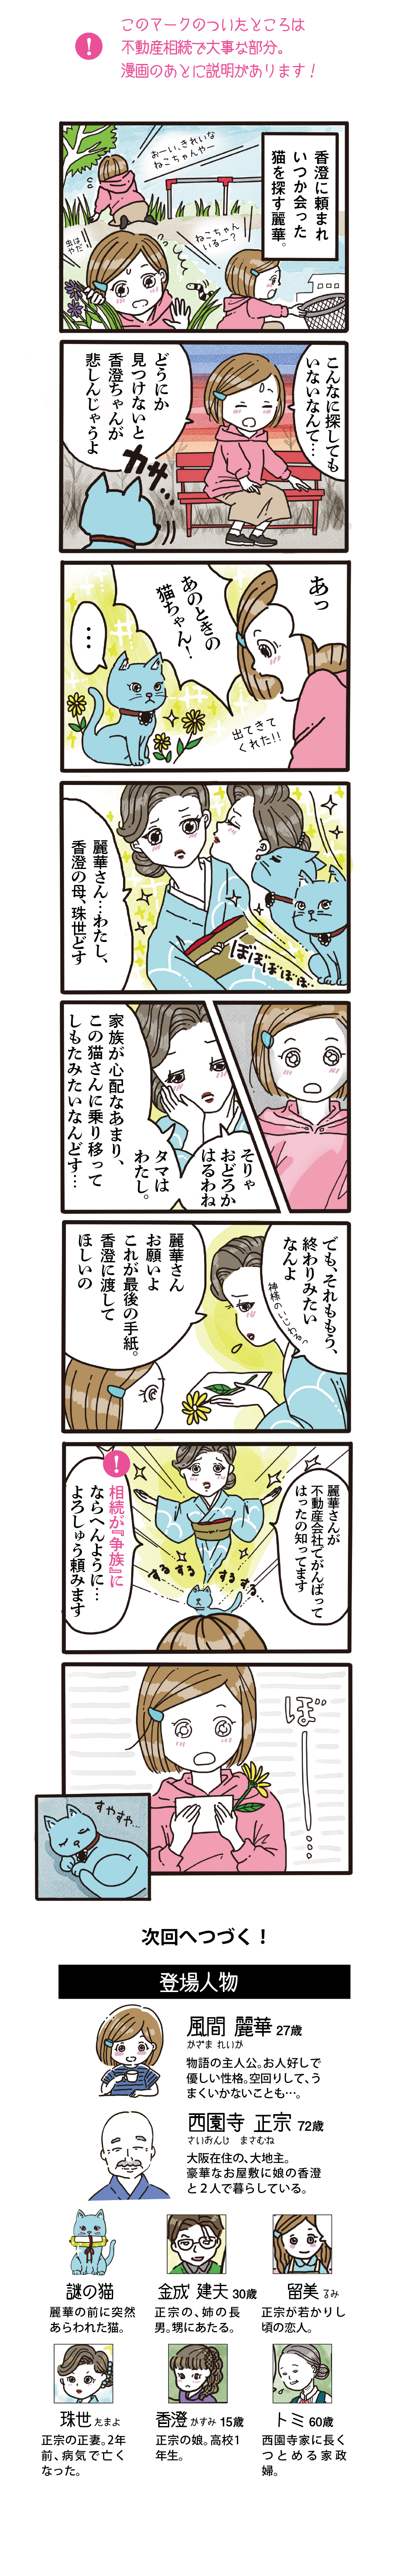 【web漫画】華麗なるSOUZOKU #9